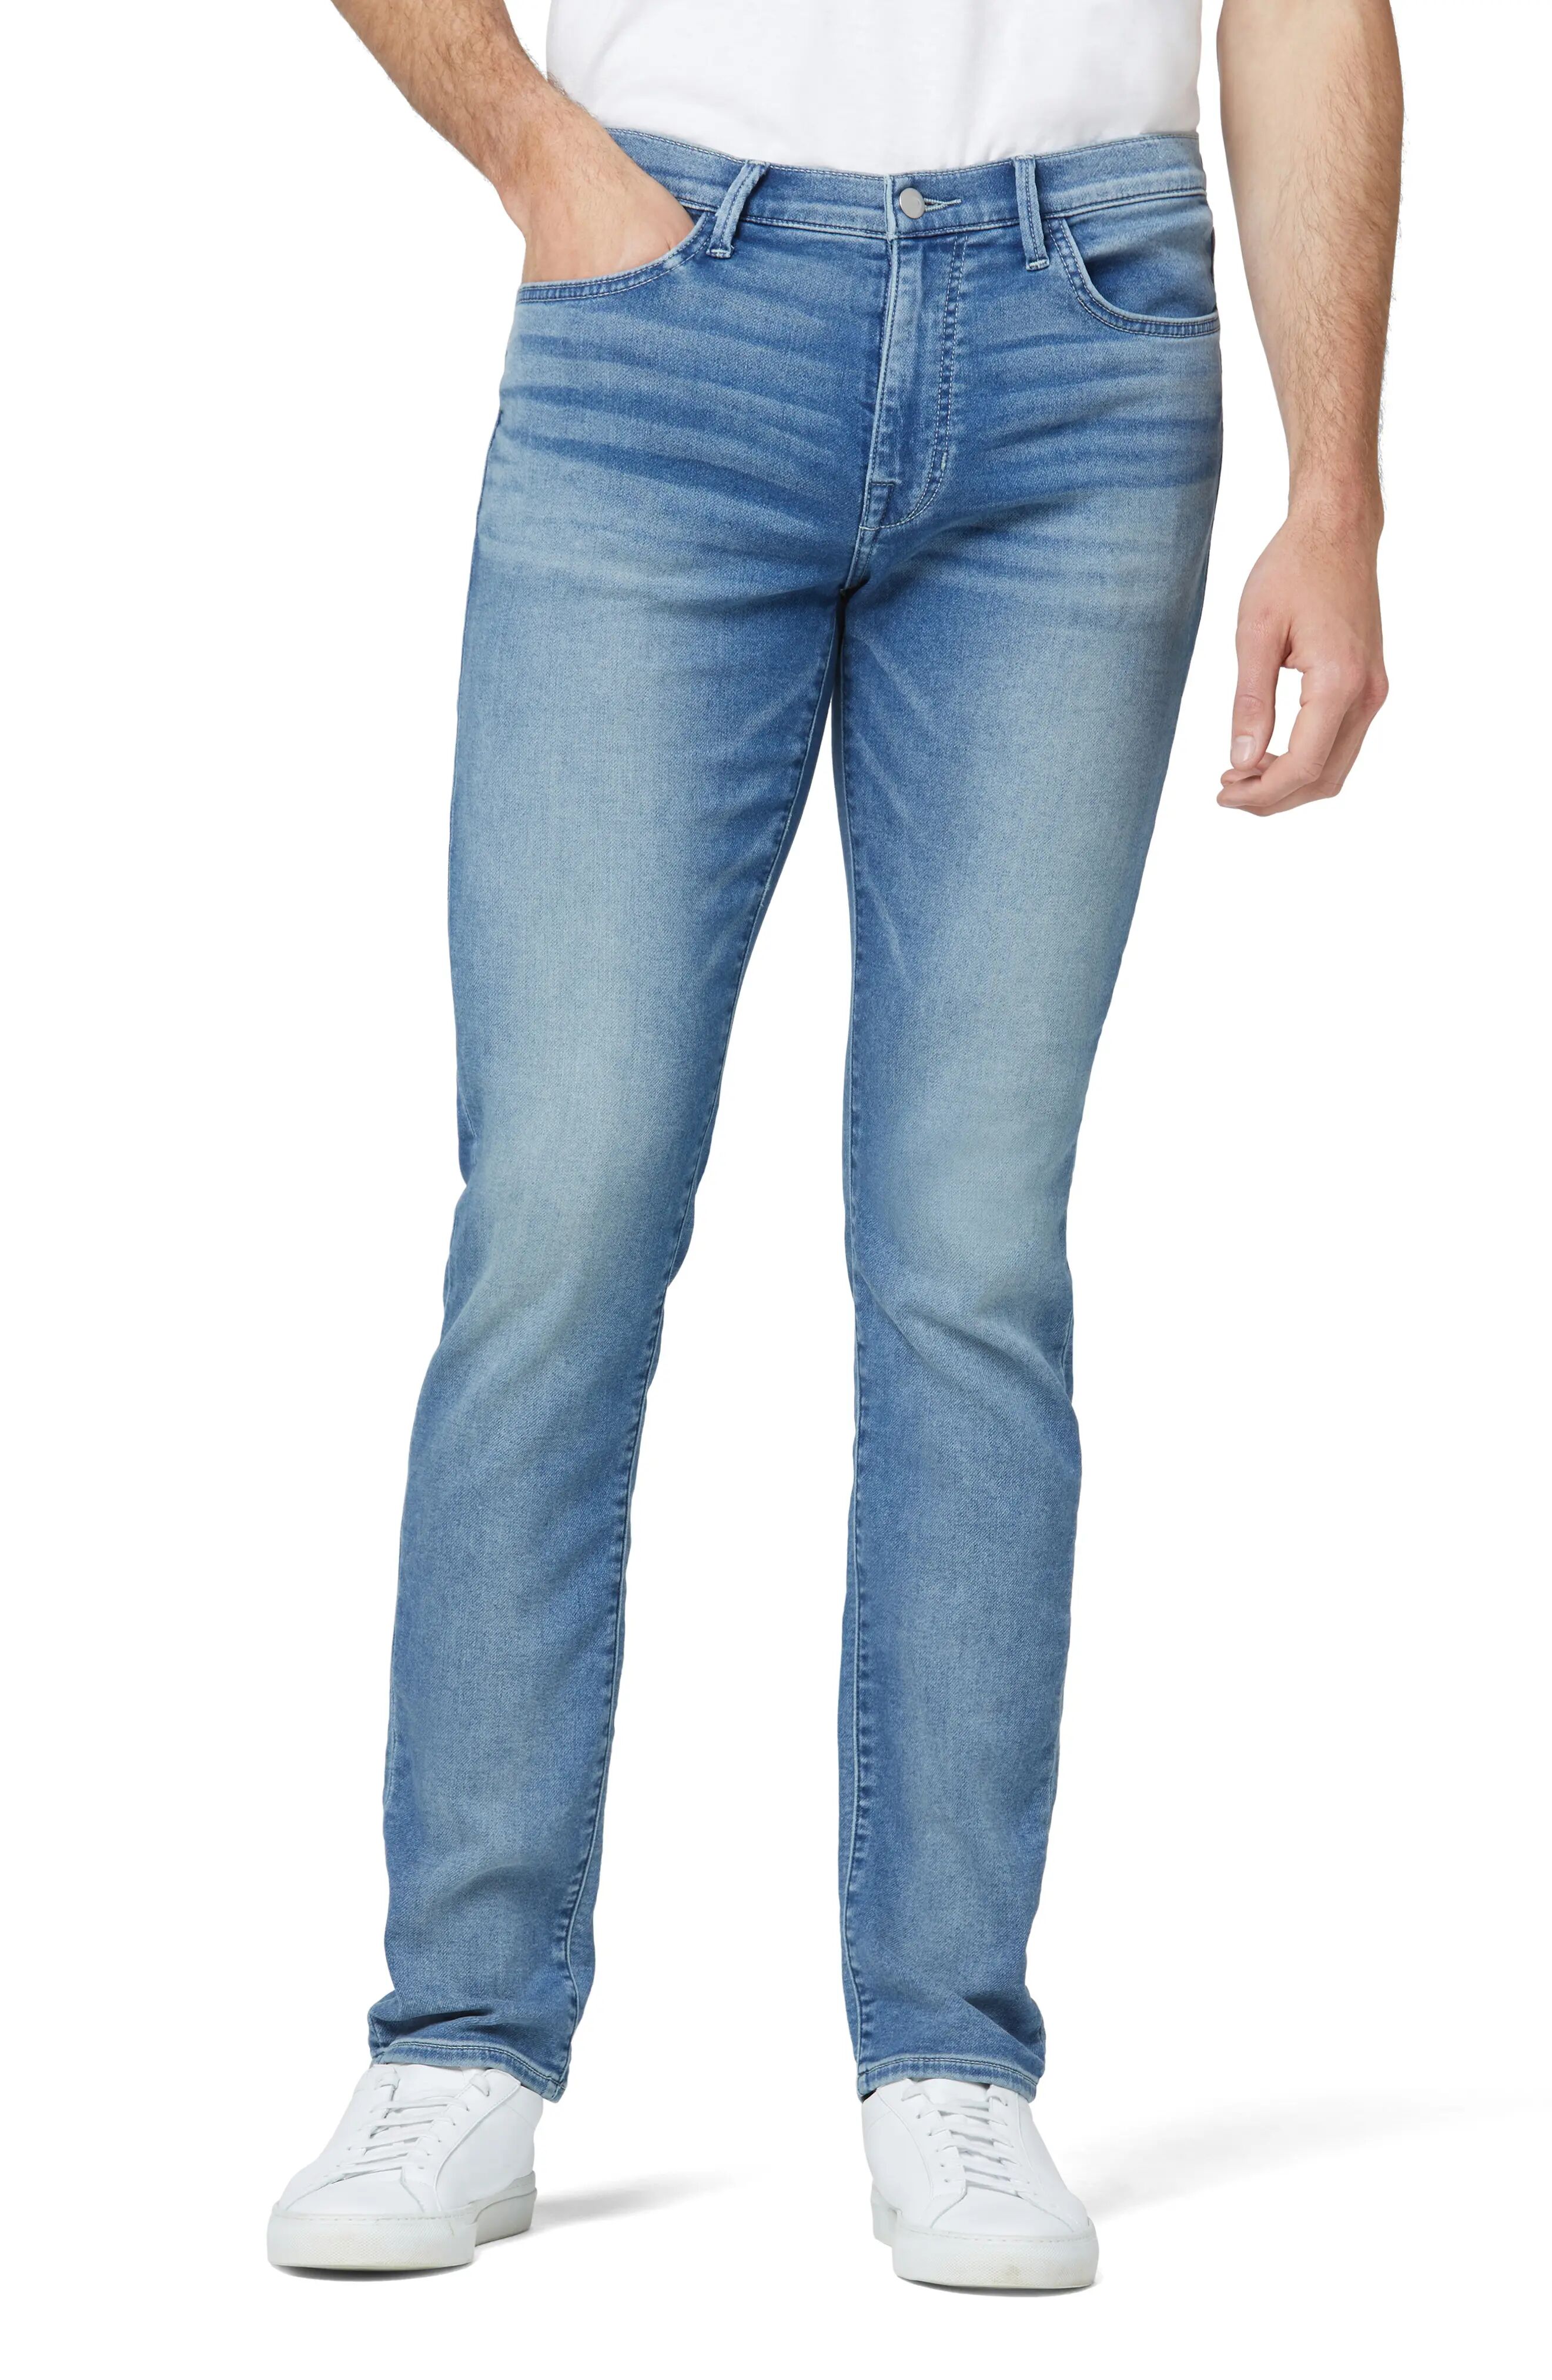 Joe's The Asher Slim Fit Jeans in Hamer at Nordstrom Rack, Size 34